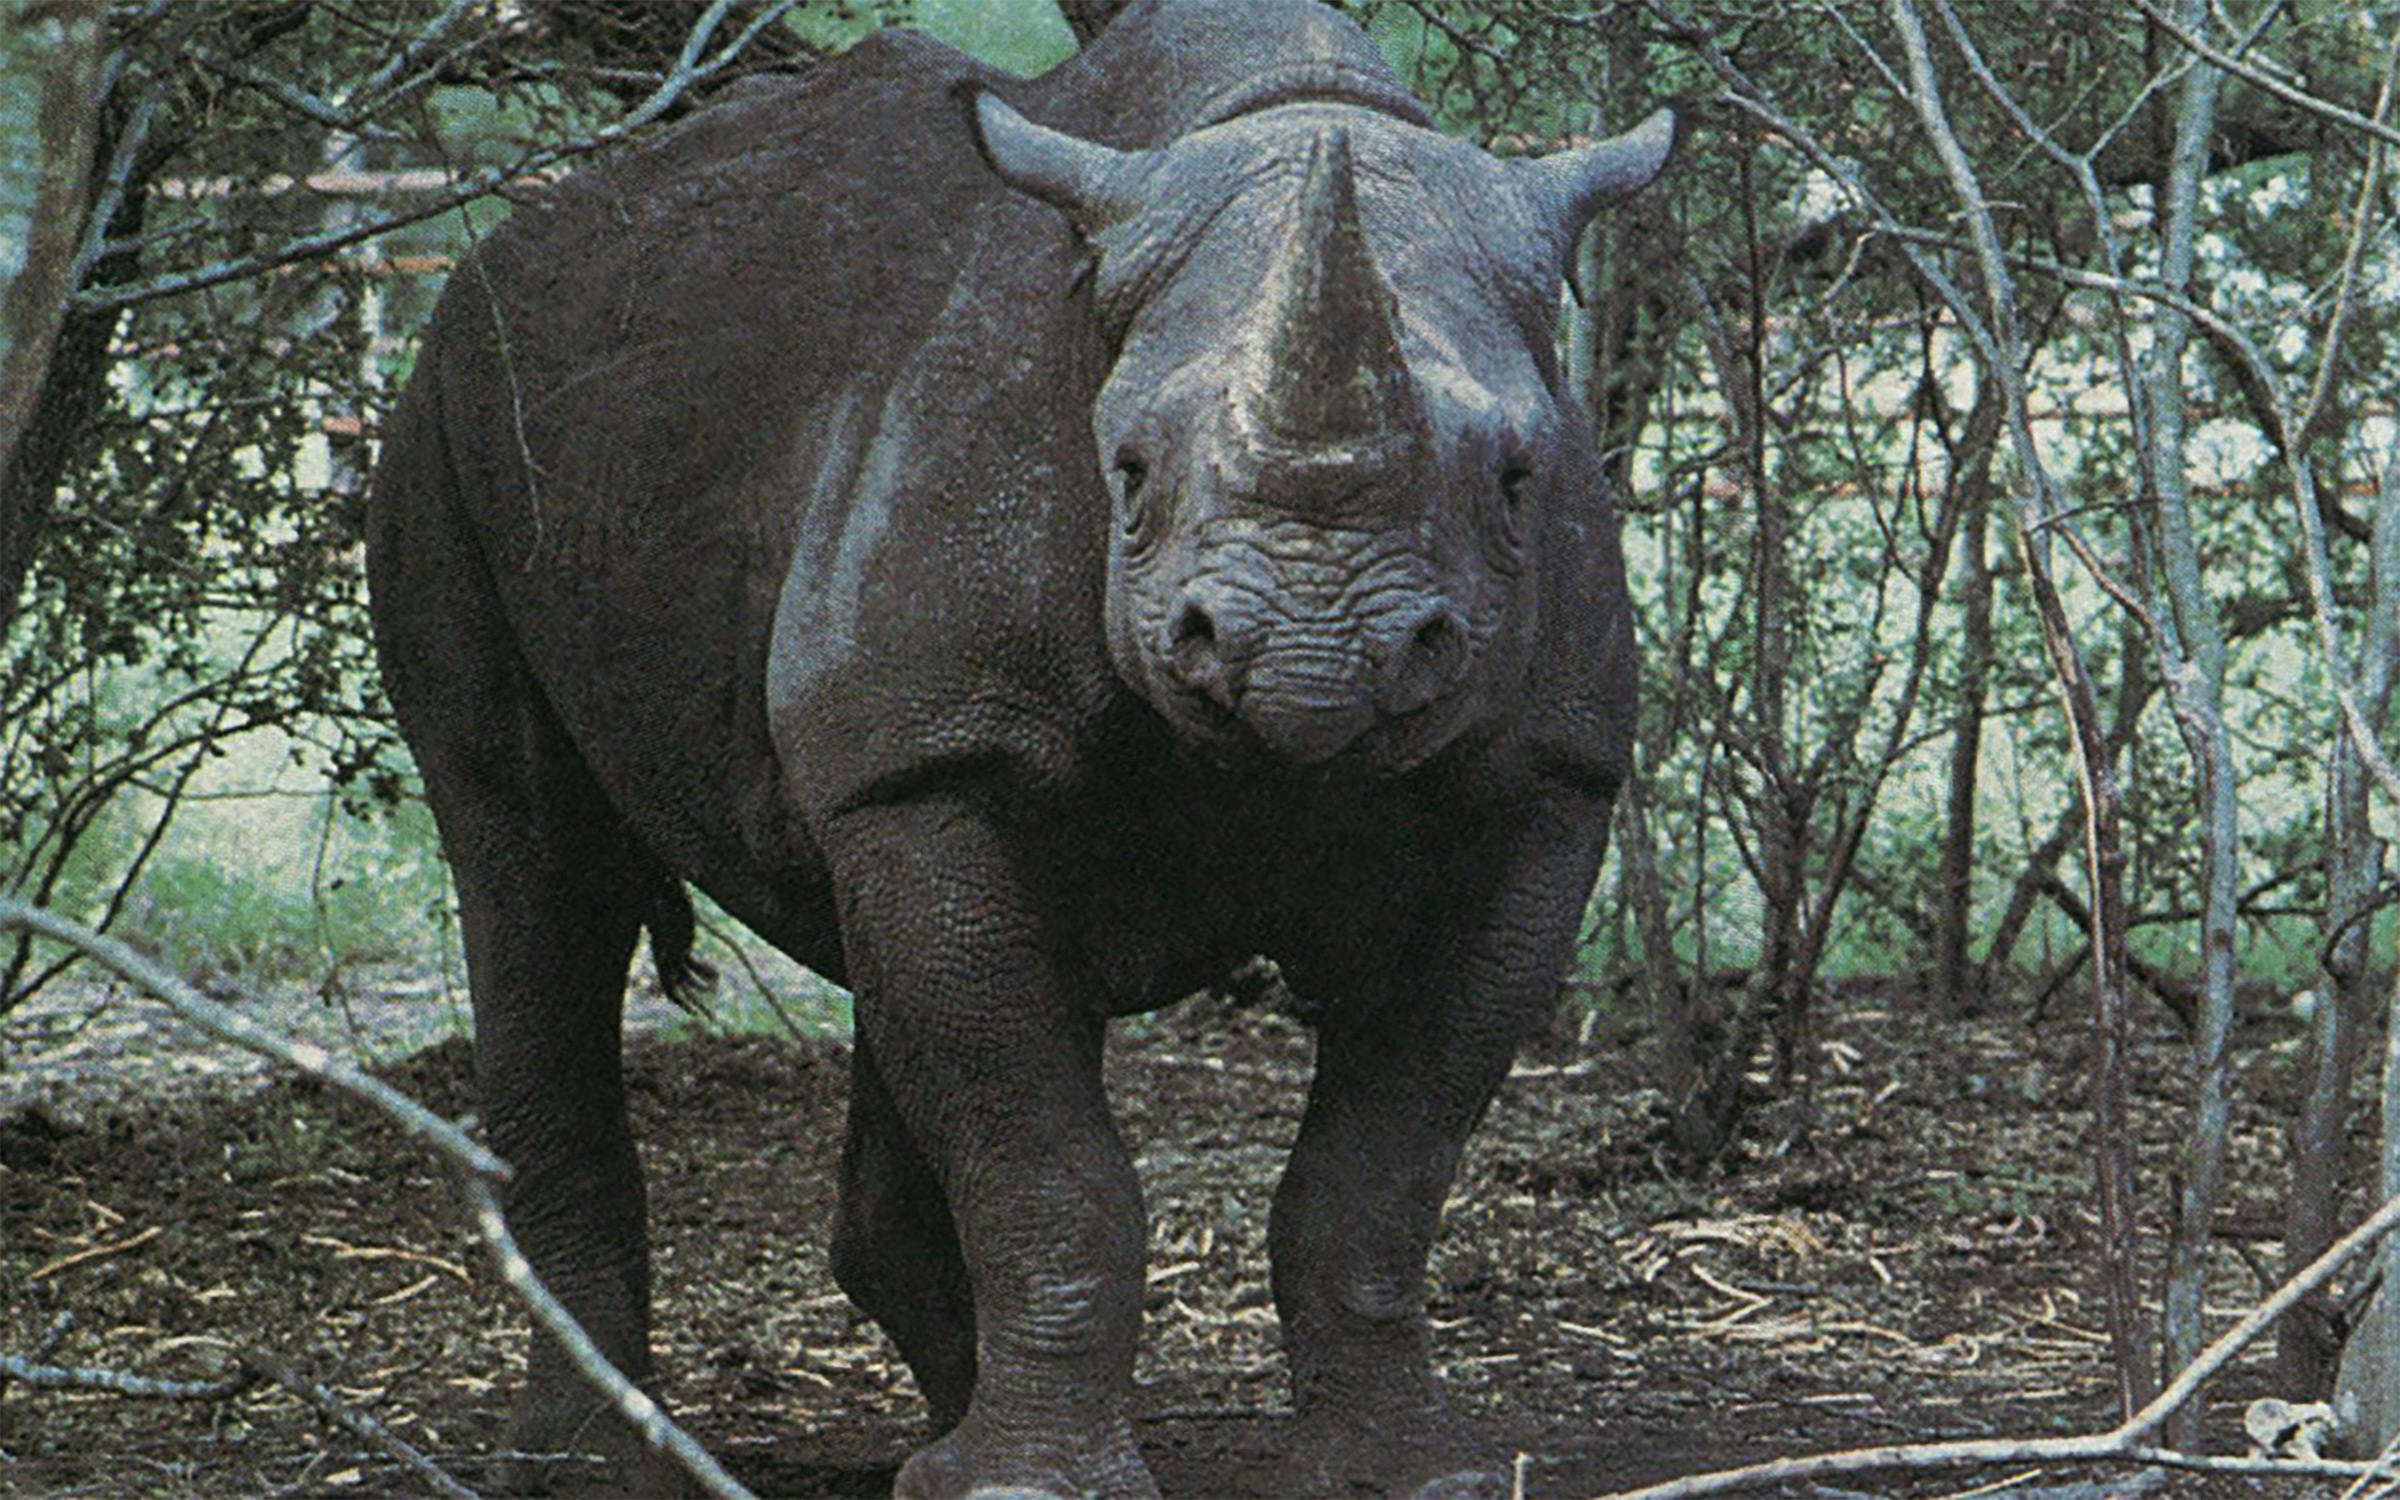 Black Rhino Horn Stolen From UVM Recovered